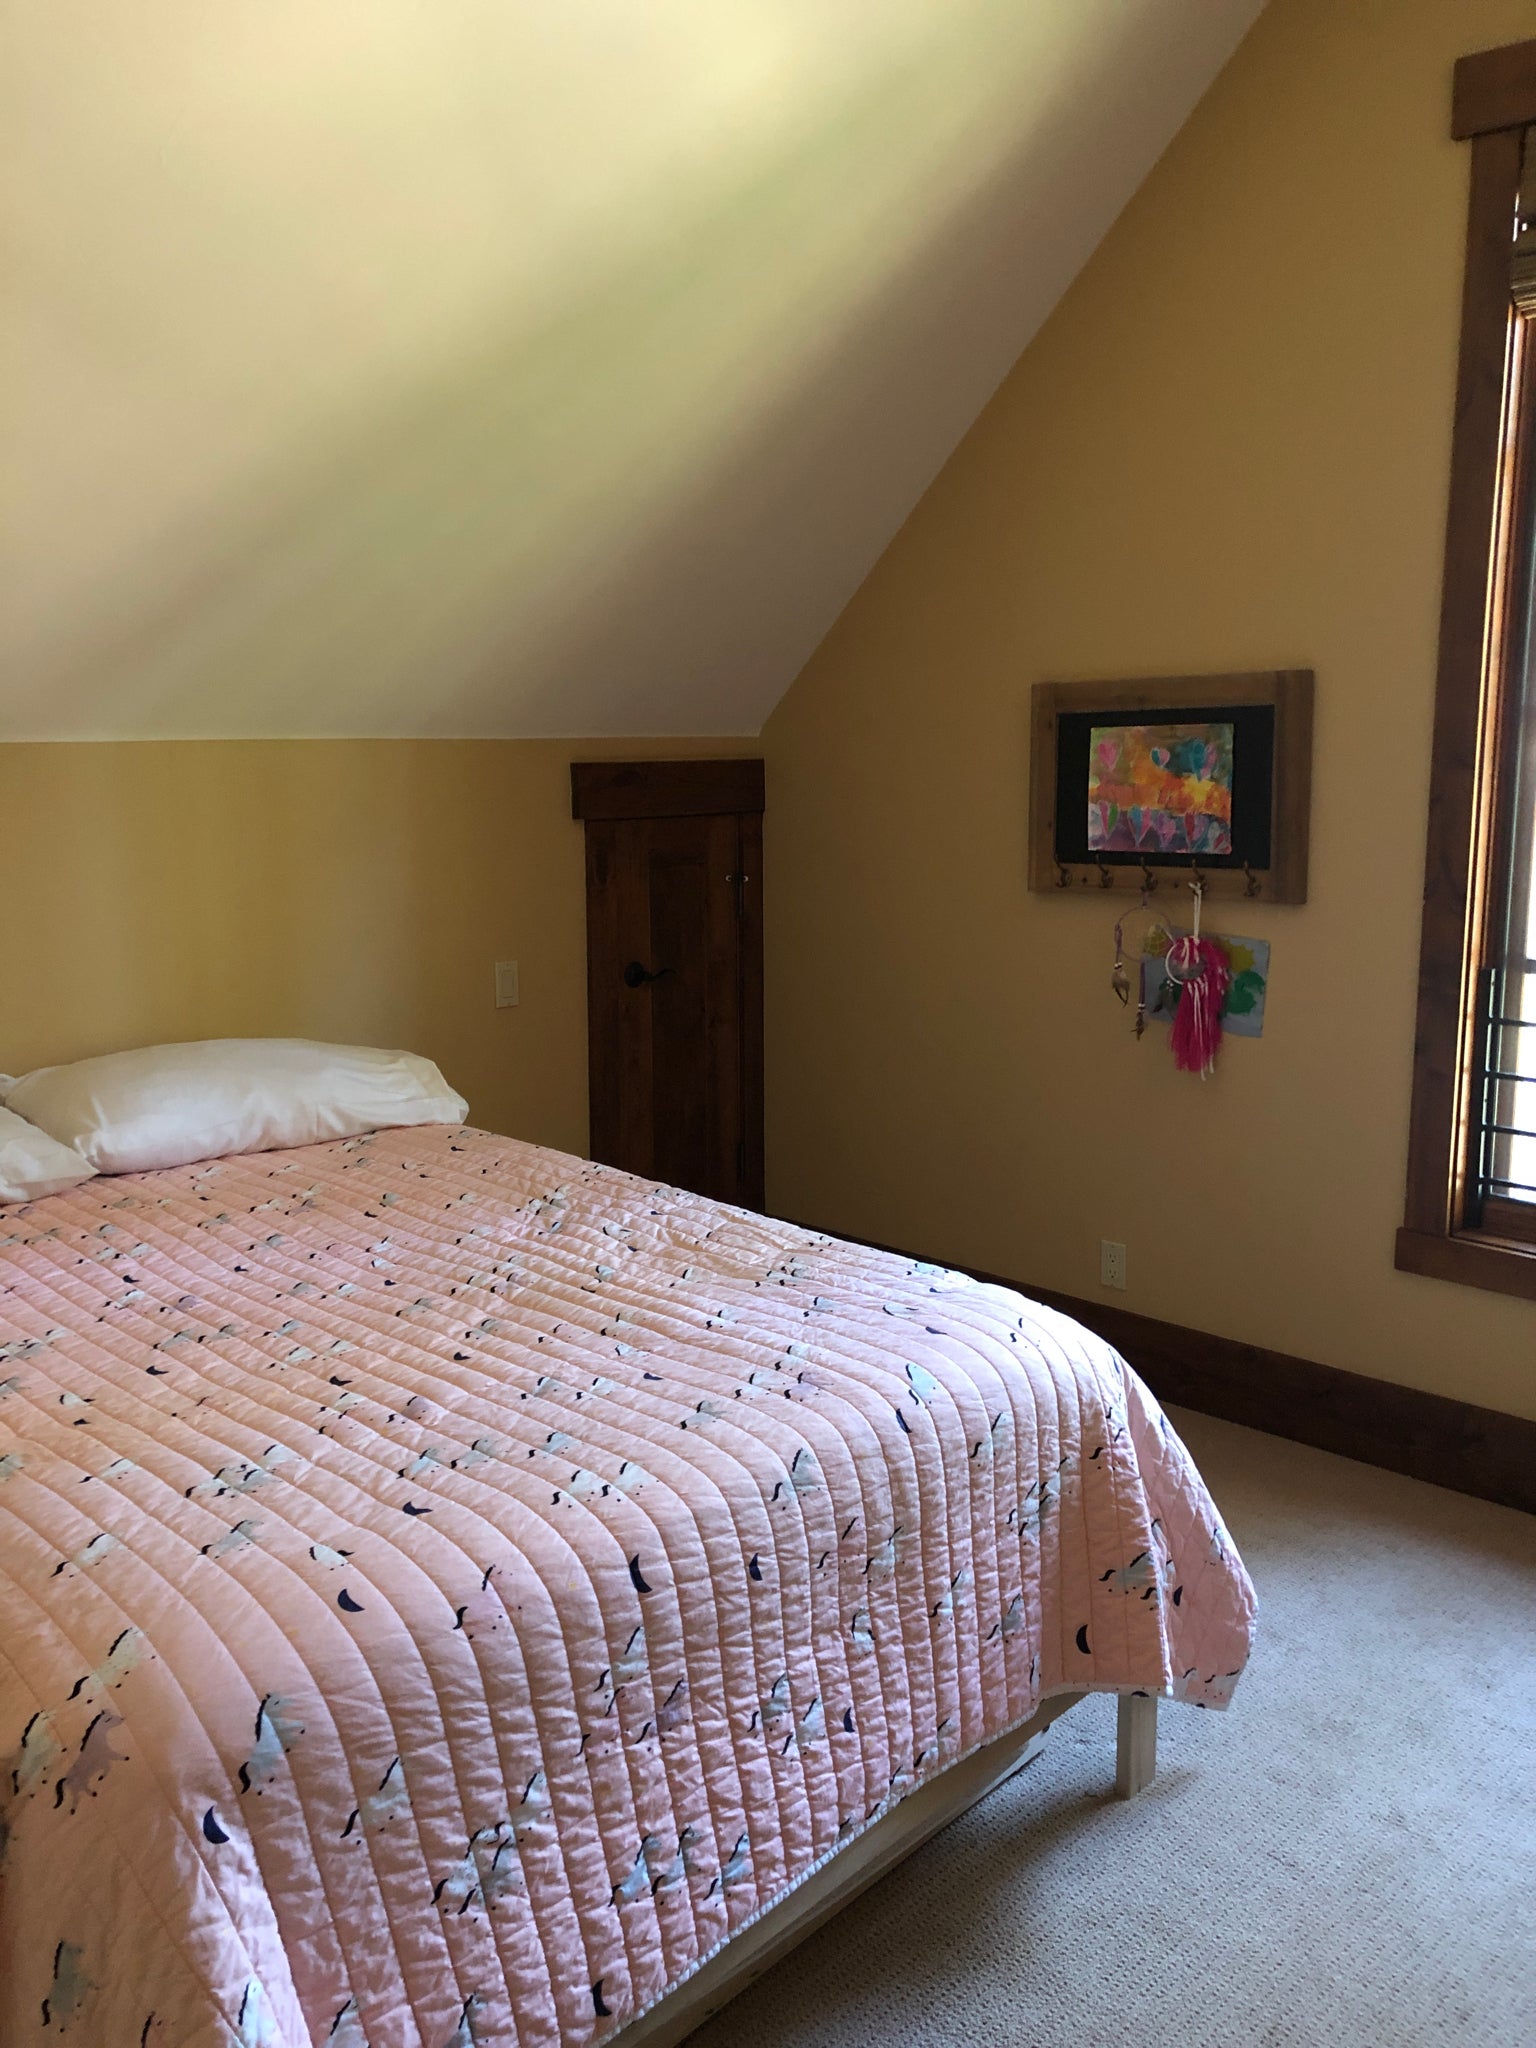 bedroom with pink duvet